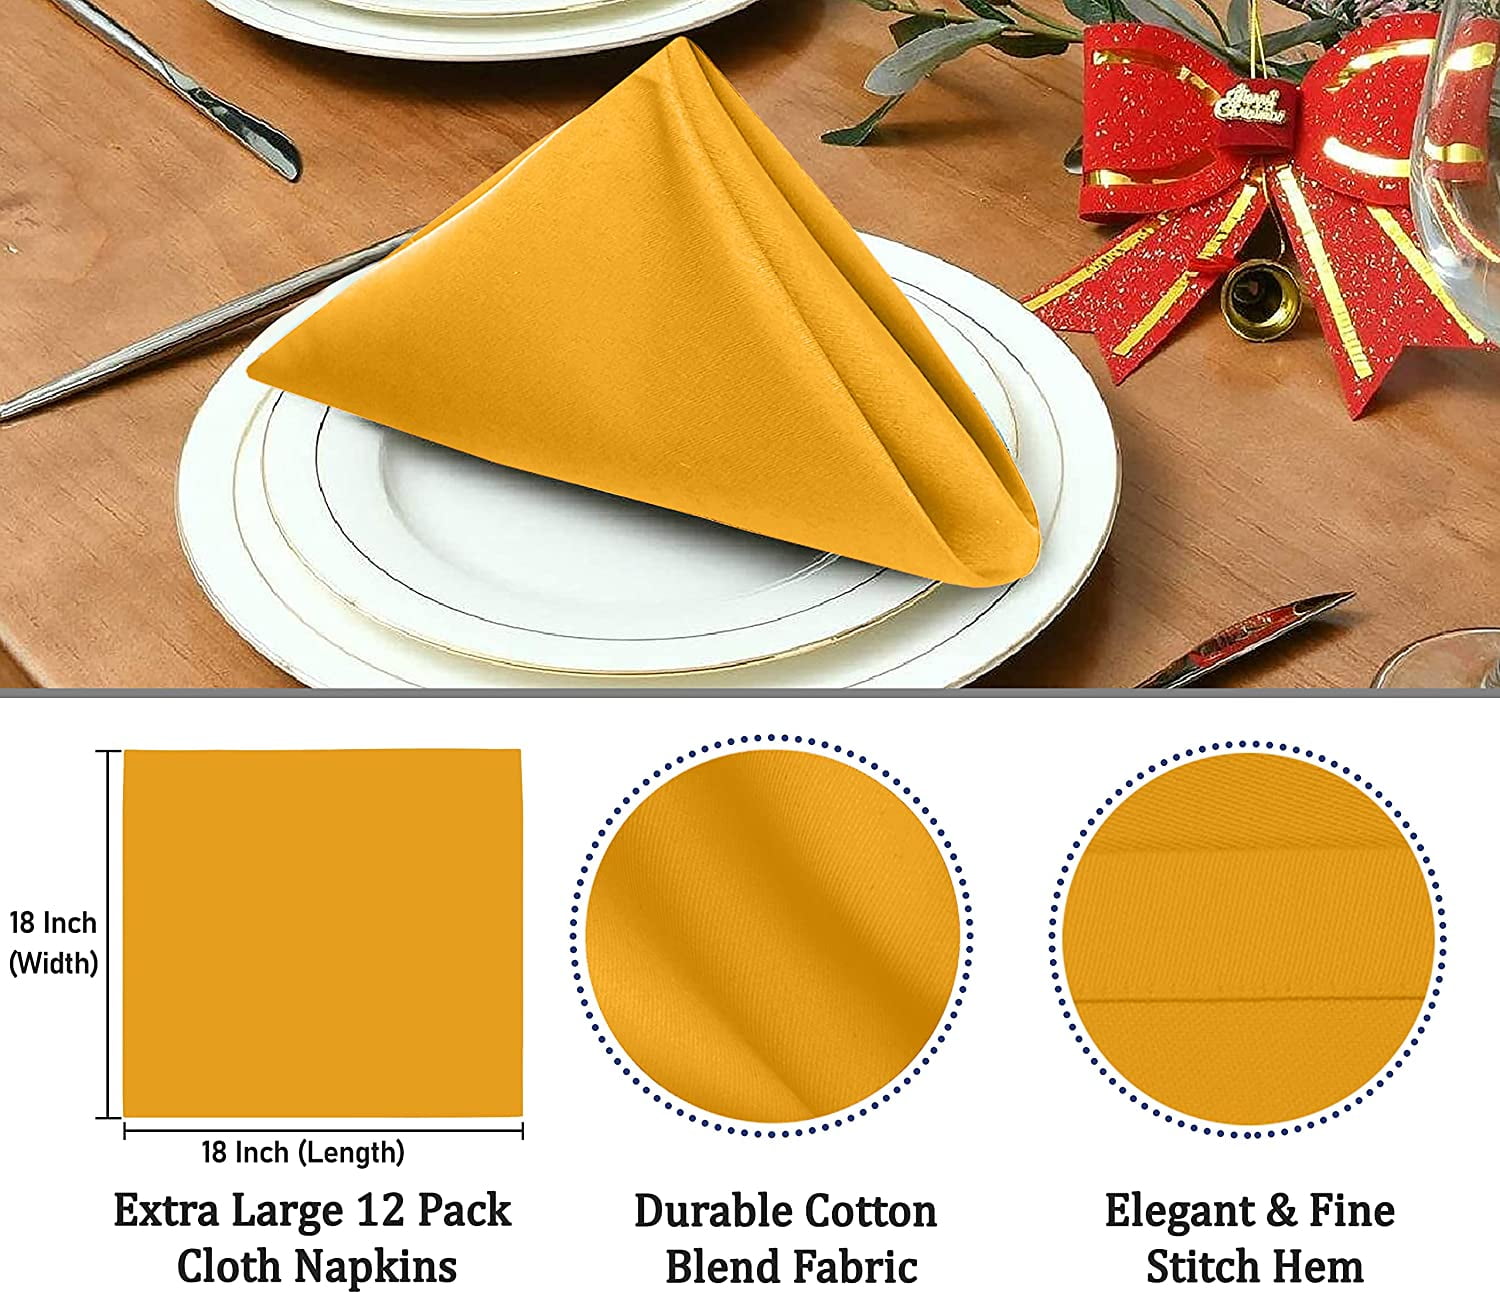 Ruvanti Cloth Napkins 12 Pack 20x20 inch Dinner Napkins, Soft & Absorbent 100% Cotton Napkins Cloth Washable & Reusable. Linen Napkin for Christmas